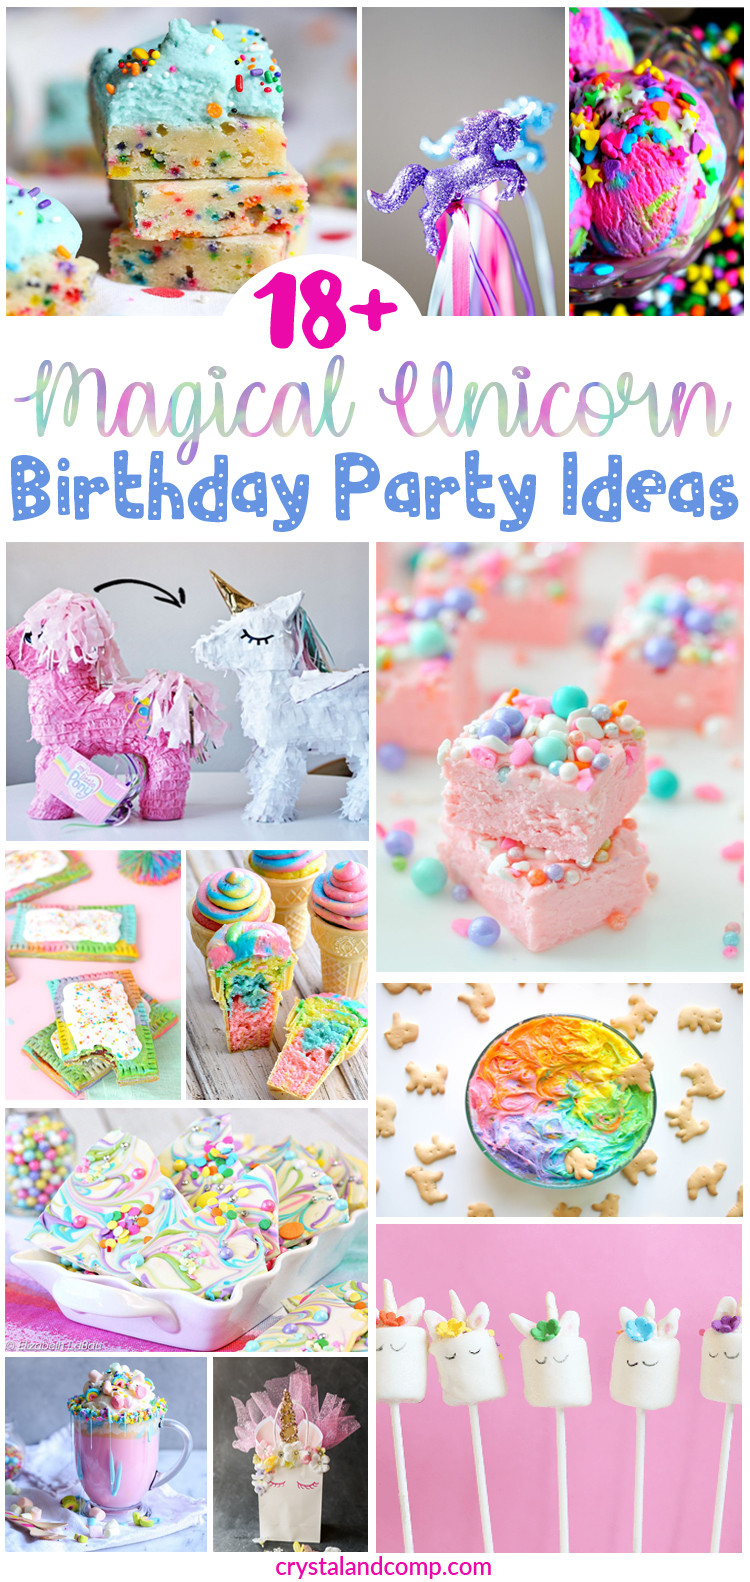 Mom'S Birthday Gift Ideas
 Over 18 Magical Unicorn Birthday Party Ideas